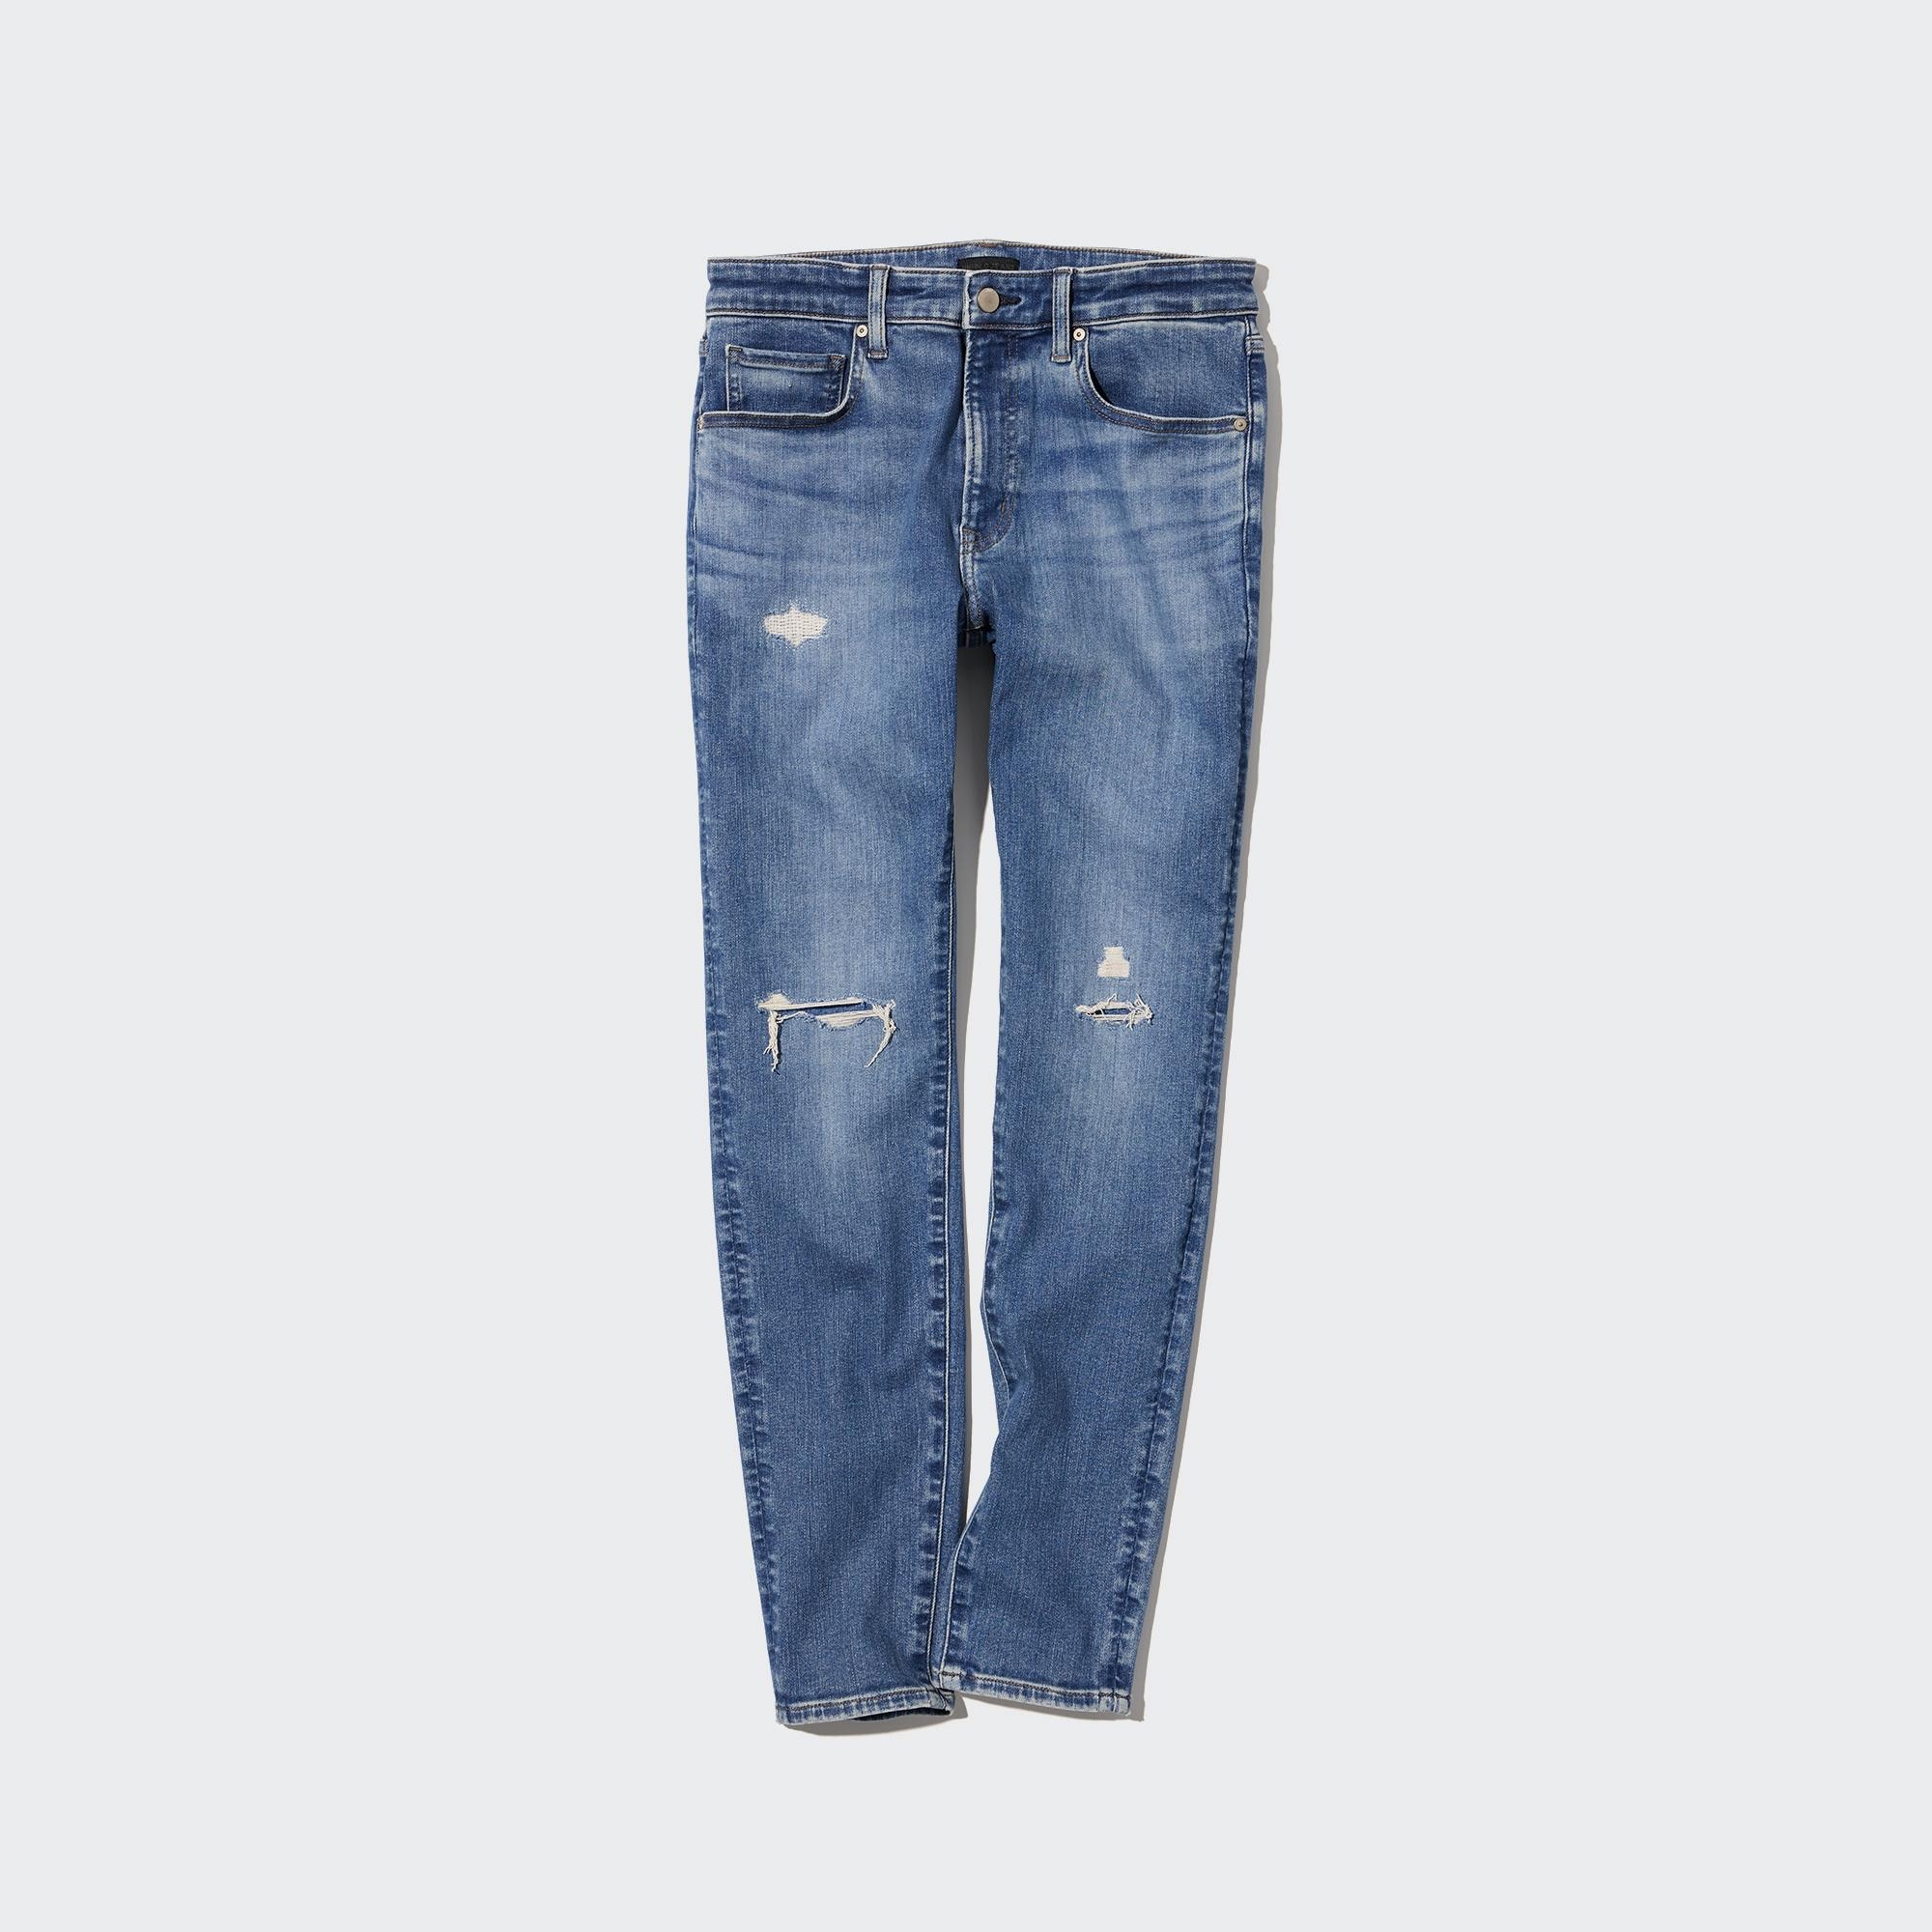 Jeans for living  Denim collection  UNIQLO SE